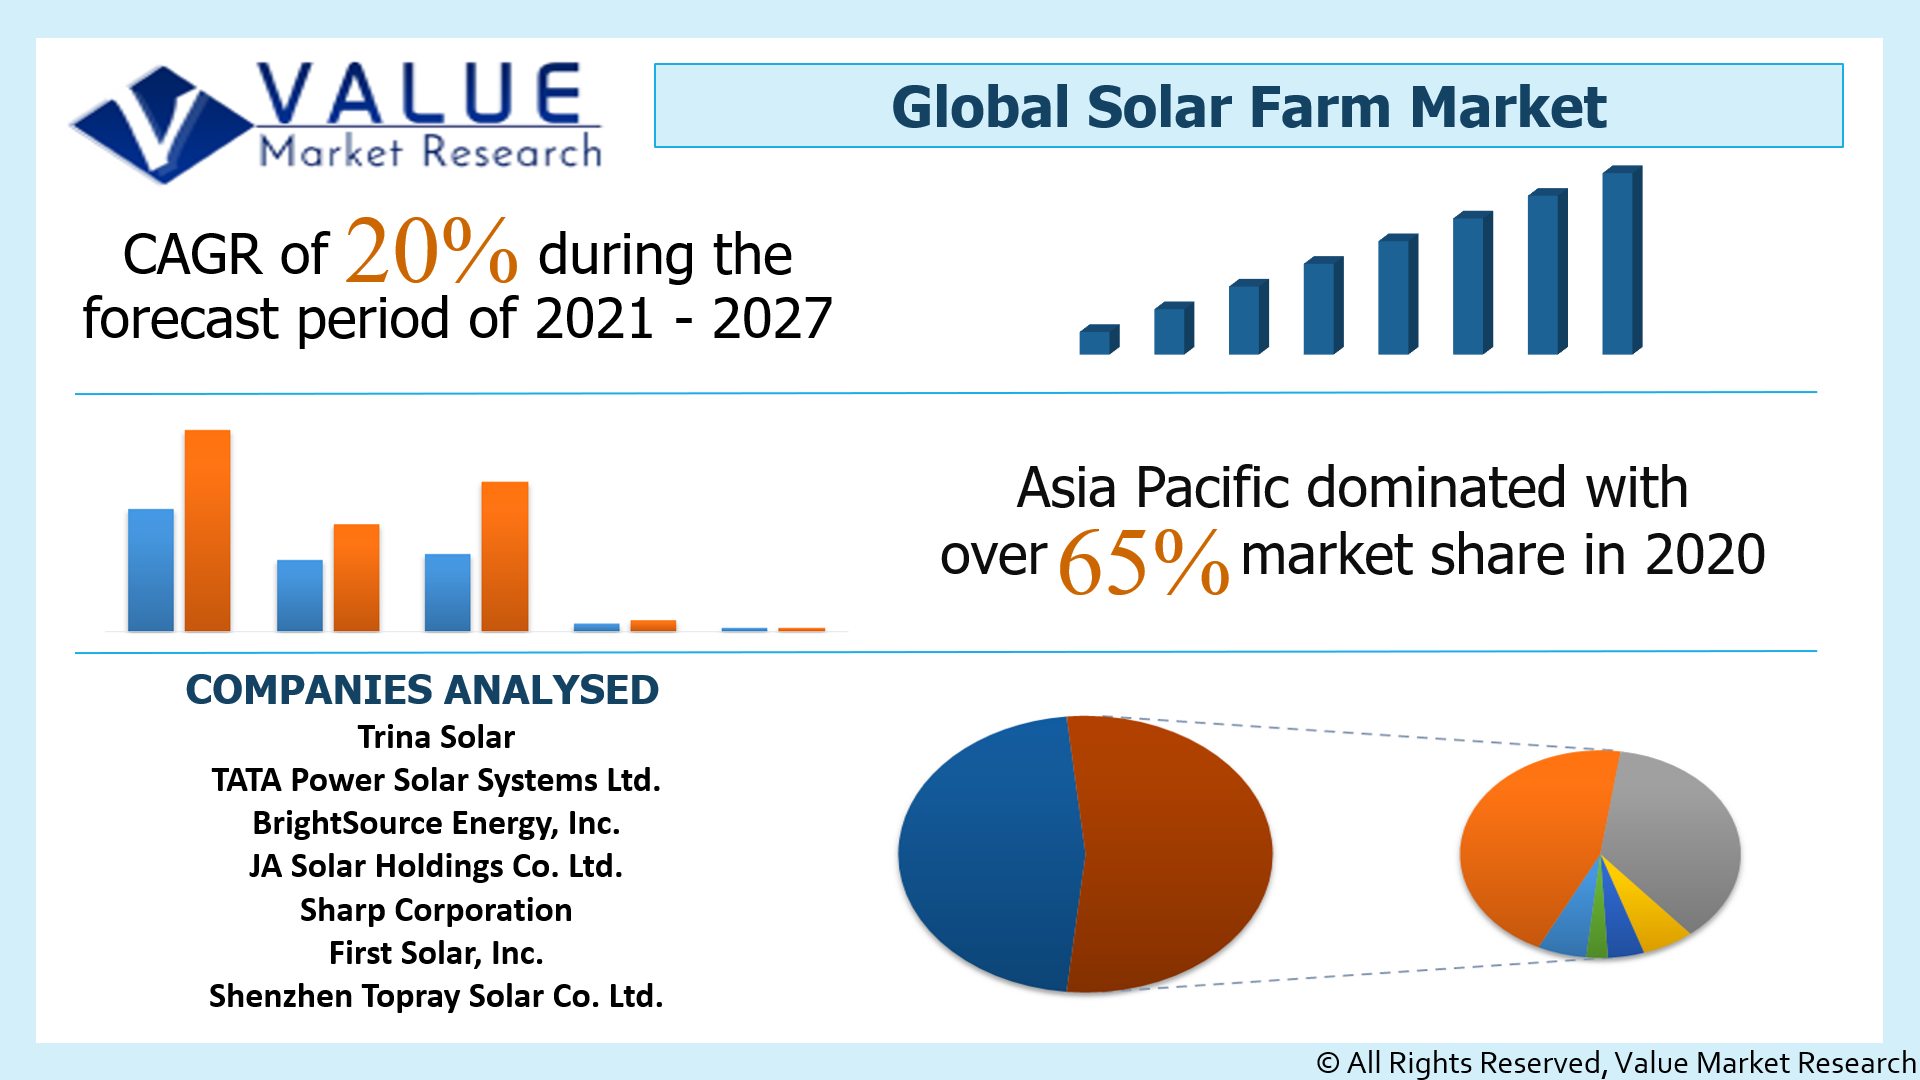 Global Solar Farm Market Share